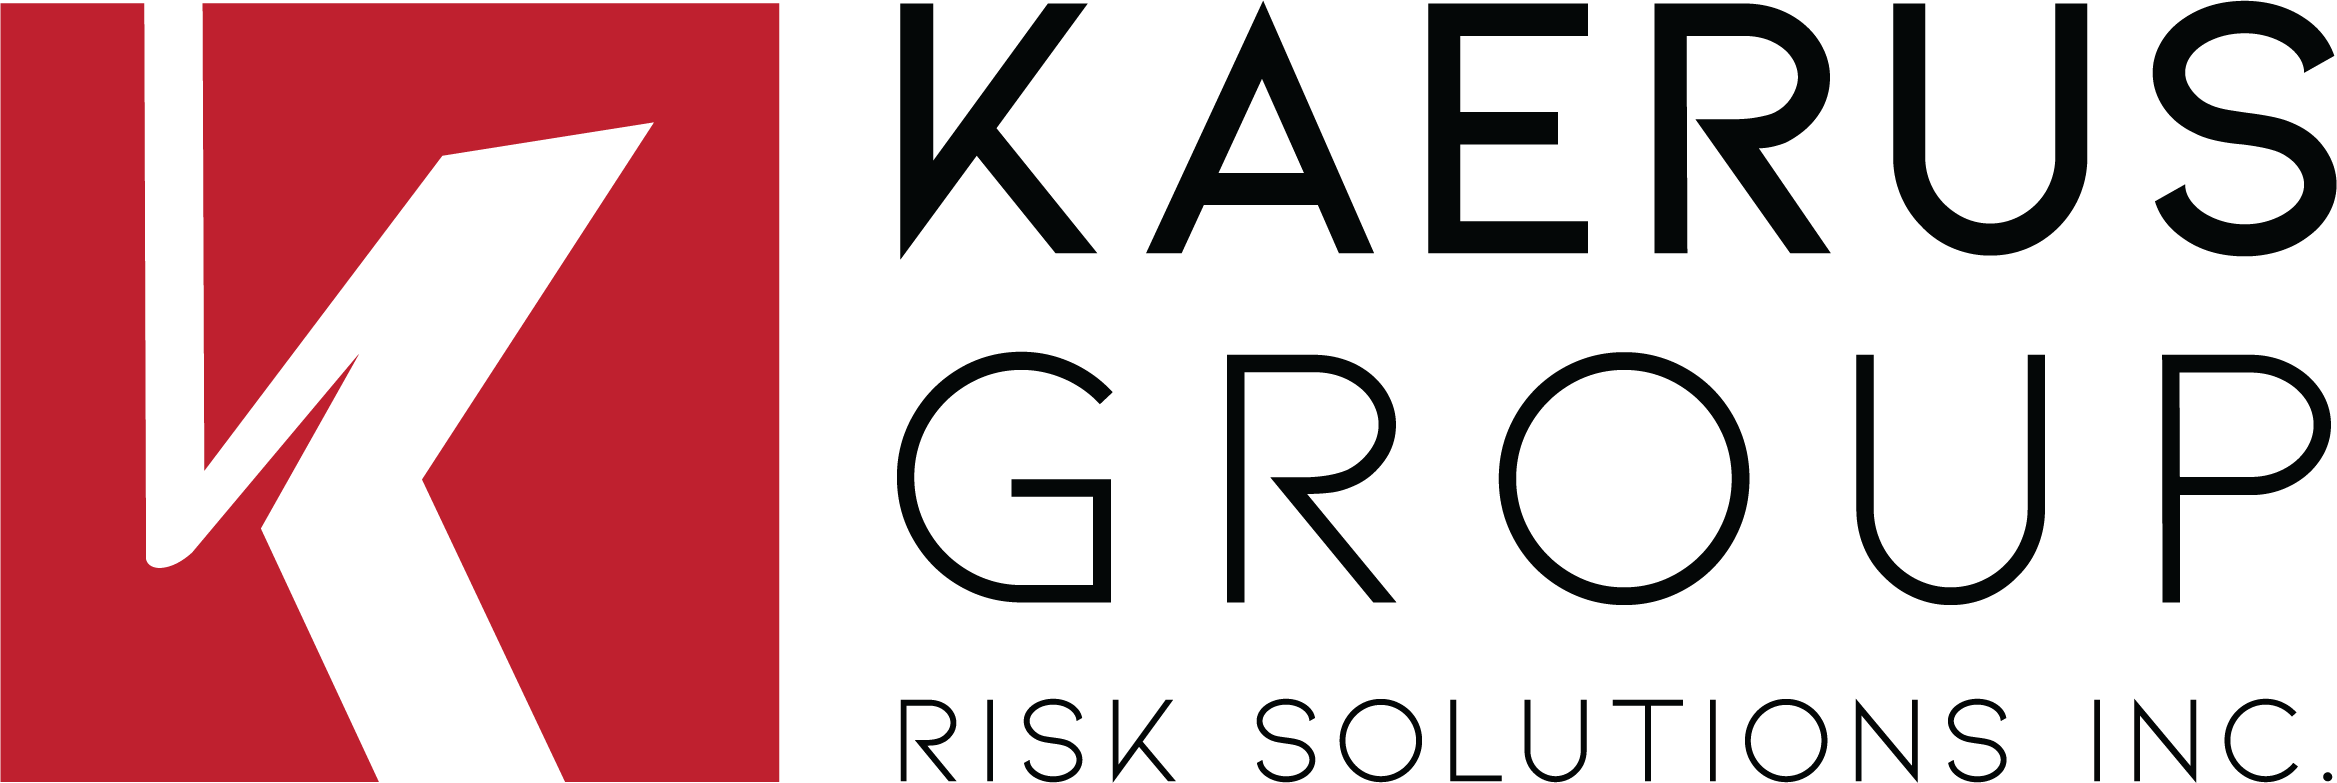 Kaerus Group